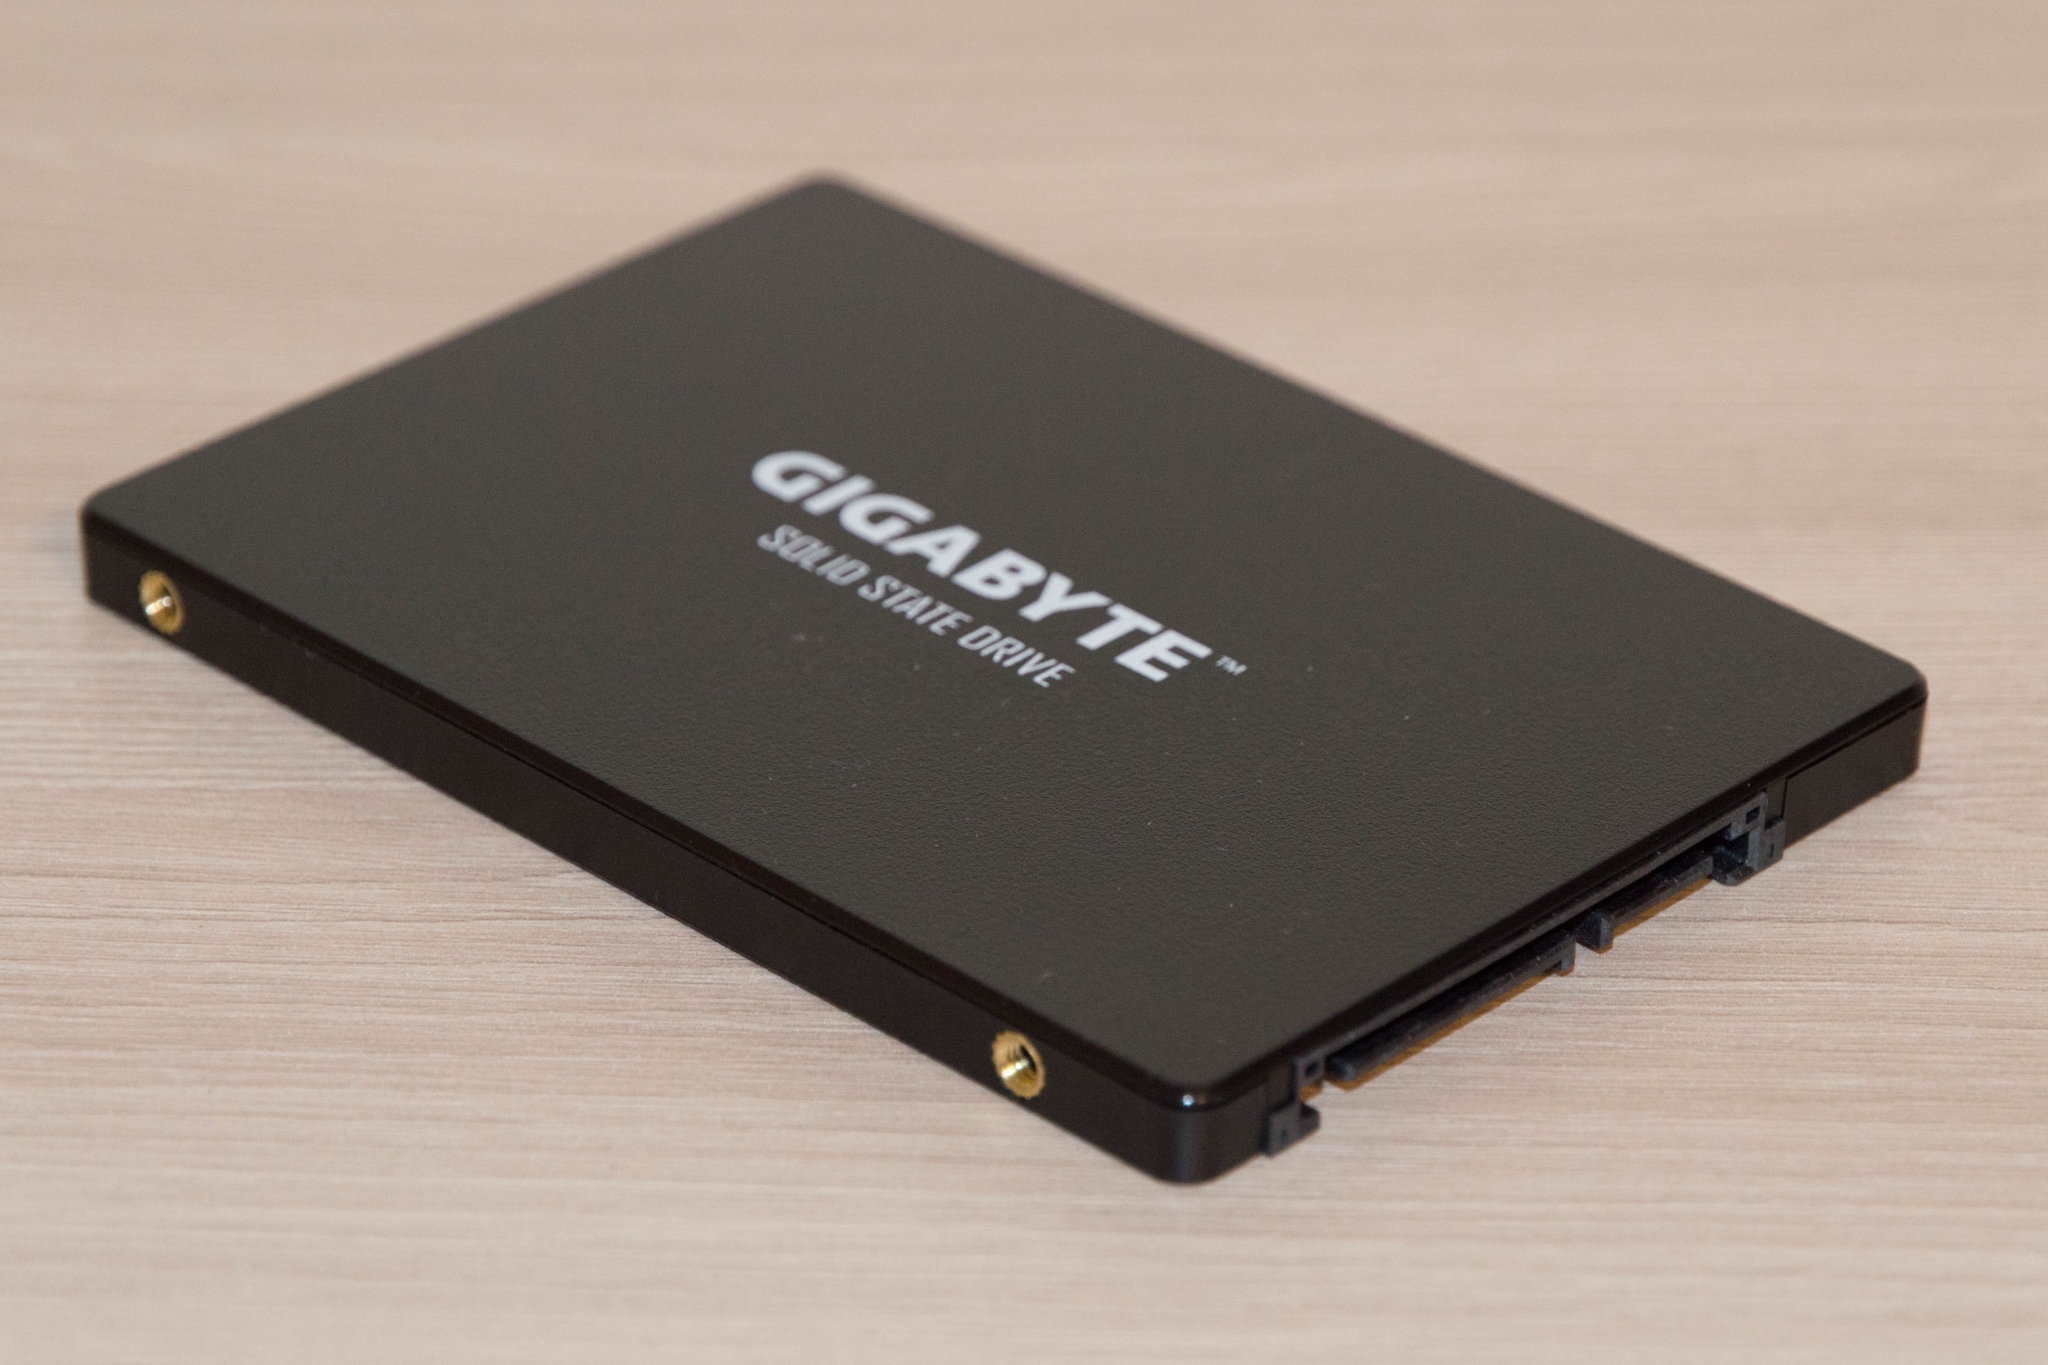 Ссд диск купить 500. Palit SSD 120gb. Gigabyte 480gb GP-gstfs31480gntd. SSD-накопитель 480gb Gigabyte. SSD:UVS 240gb Palit.